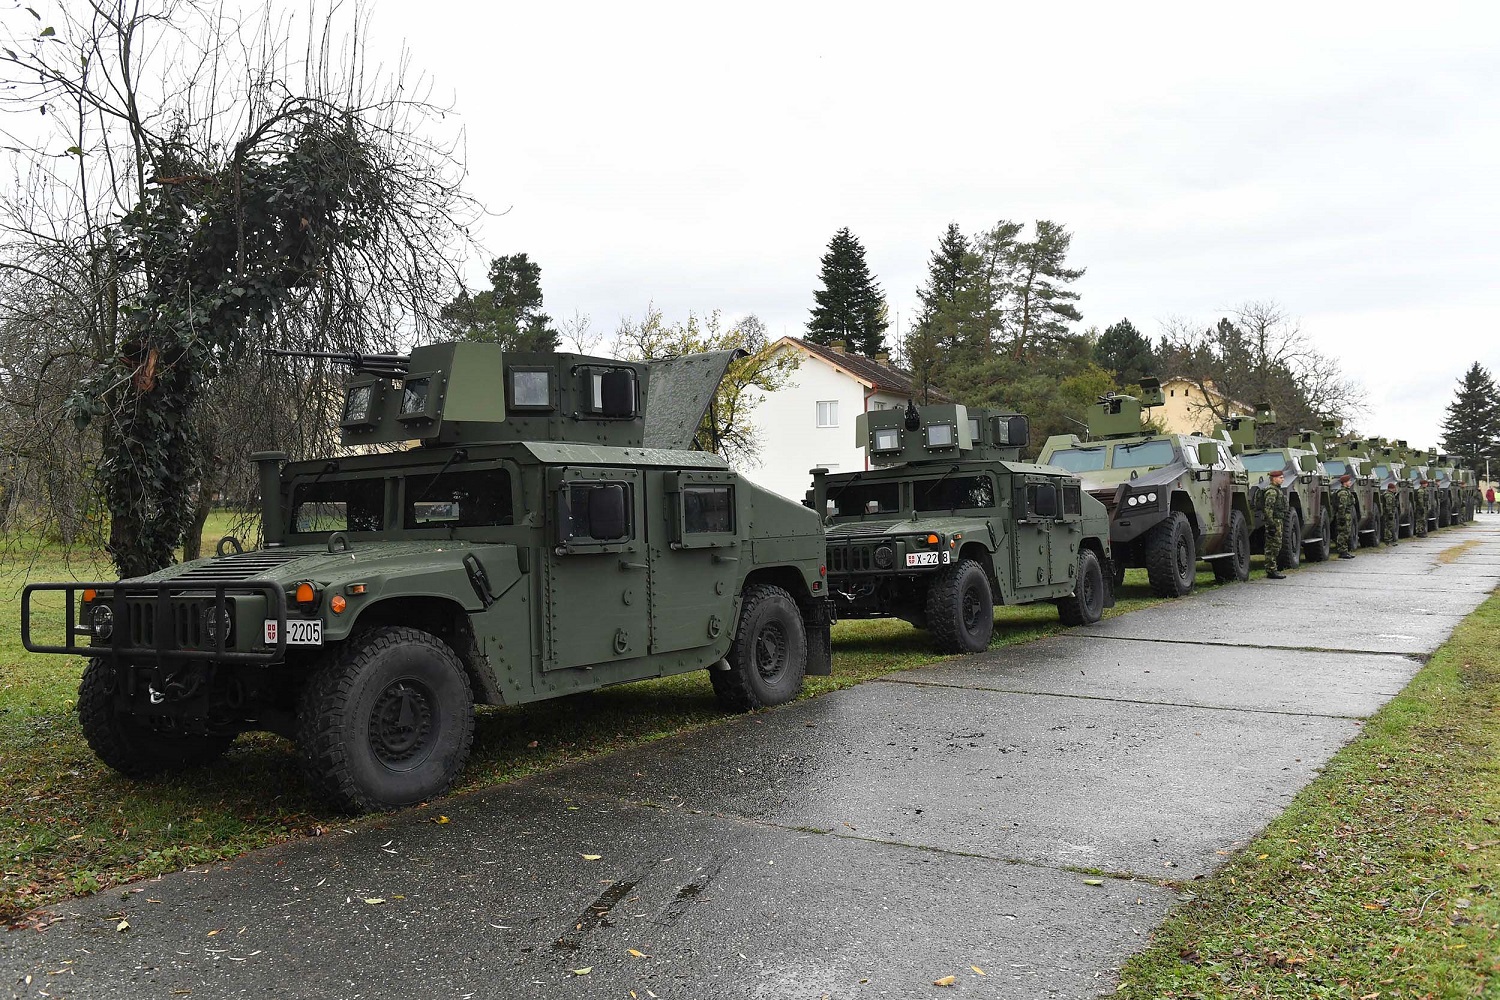 M1151A1B1 Humvee vehicles and BOV M16  multipurpose vehicle